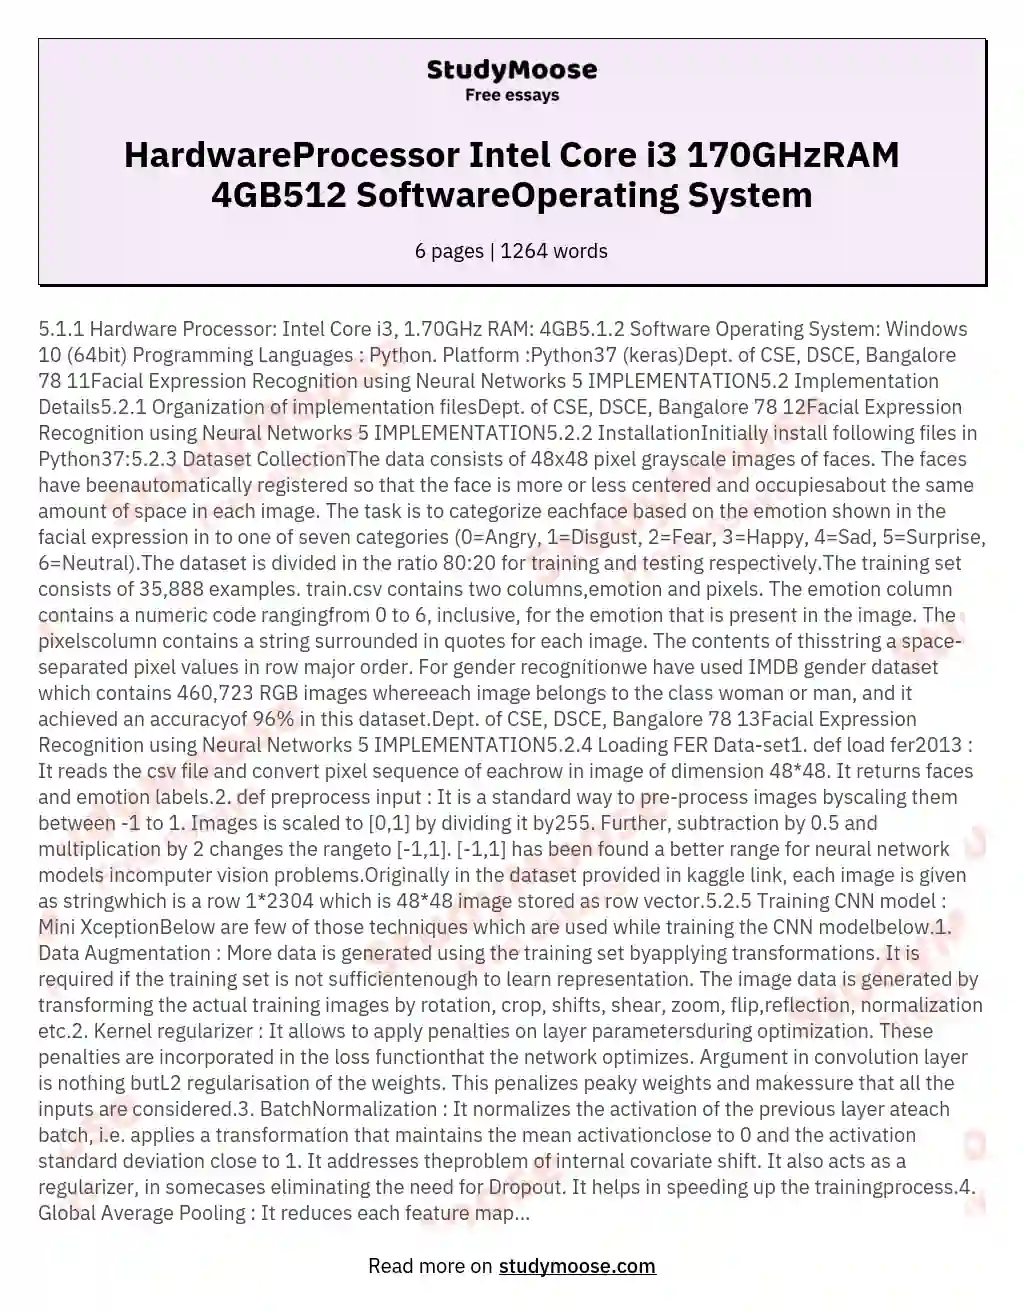 HardwareProcessor Intel Core i3 170GHzRAM 4GB512 SoftwareOperating System essay